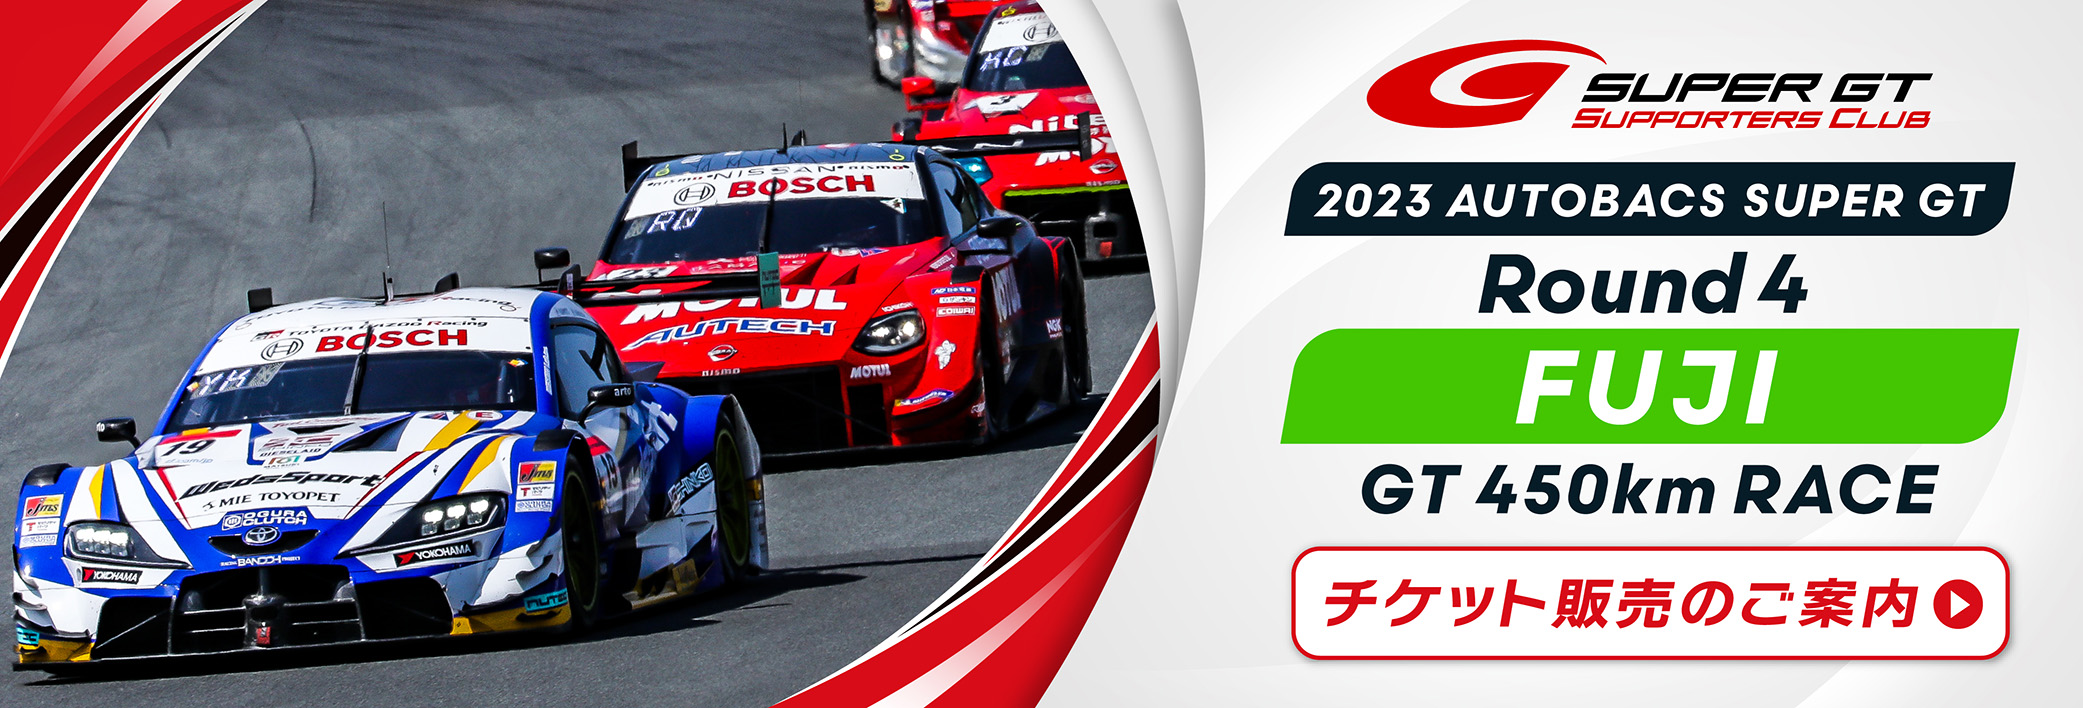 2023 AUTOBACS SUPER GT Round5　鈴鹿 GT 450km RACEチケット販売のご案内